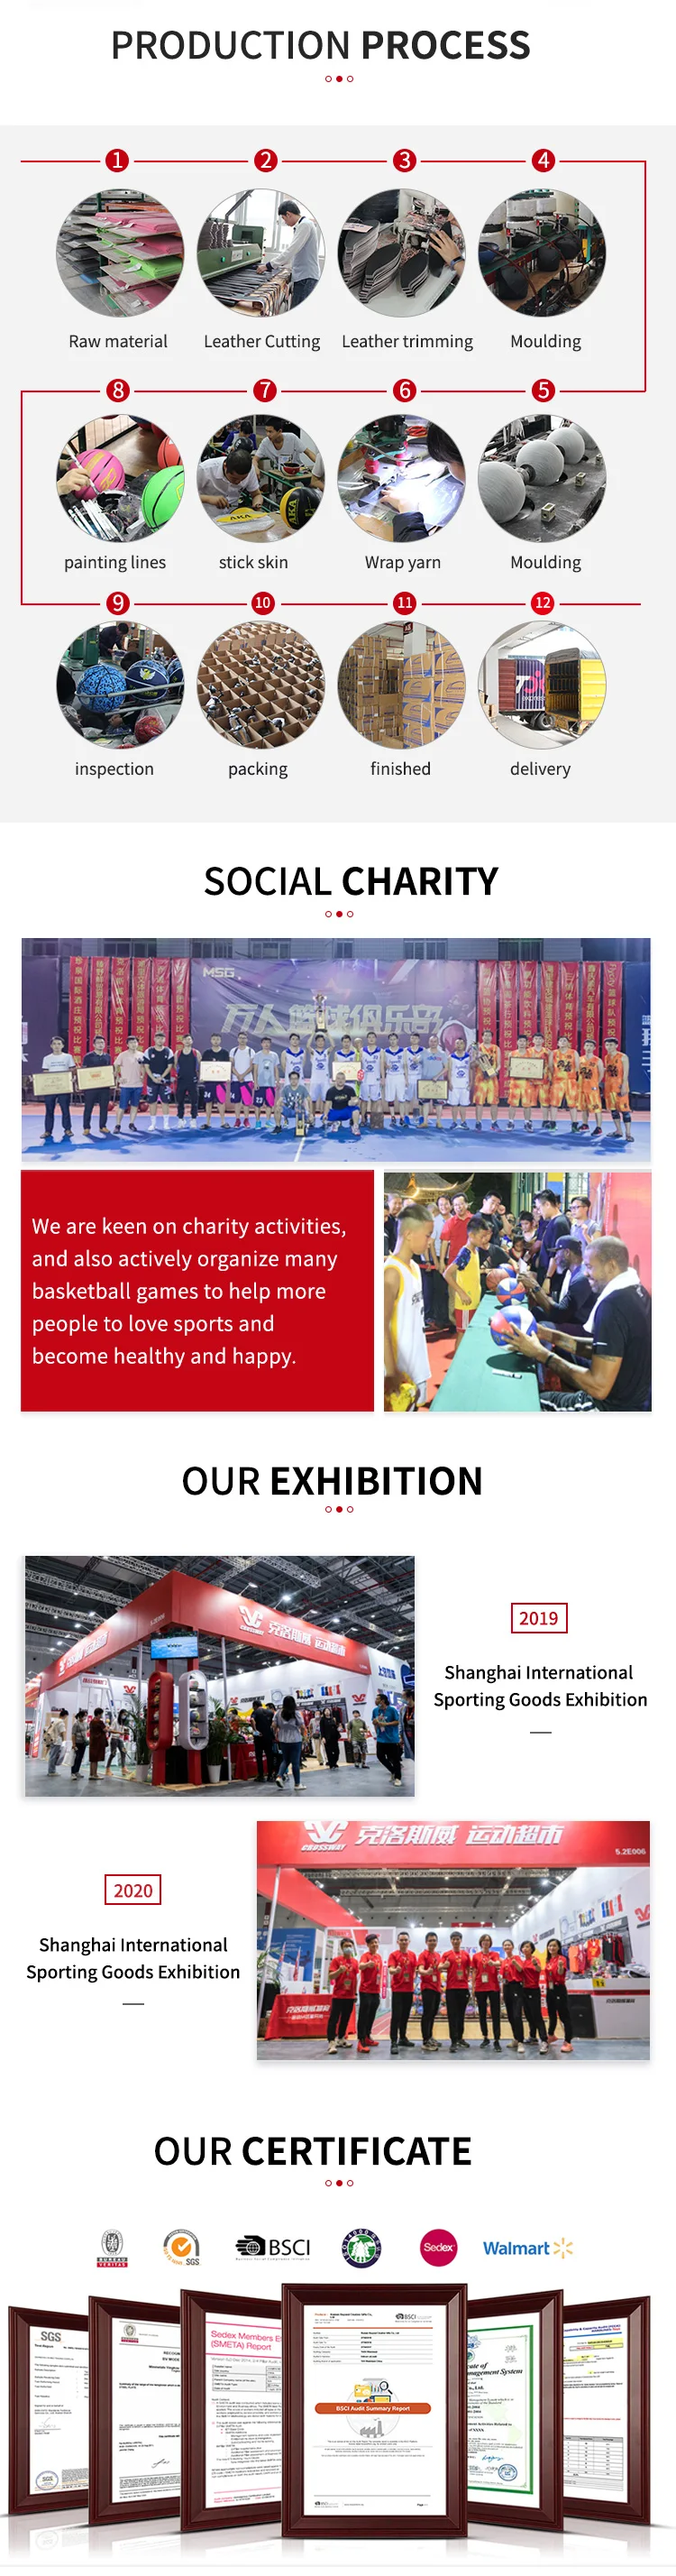 China badminton racket manufacturer companies